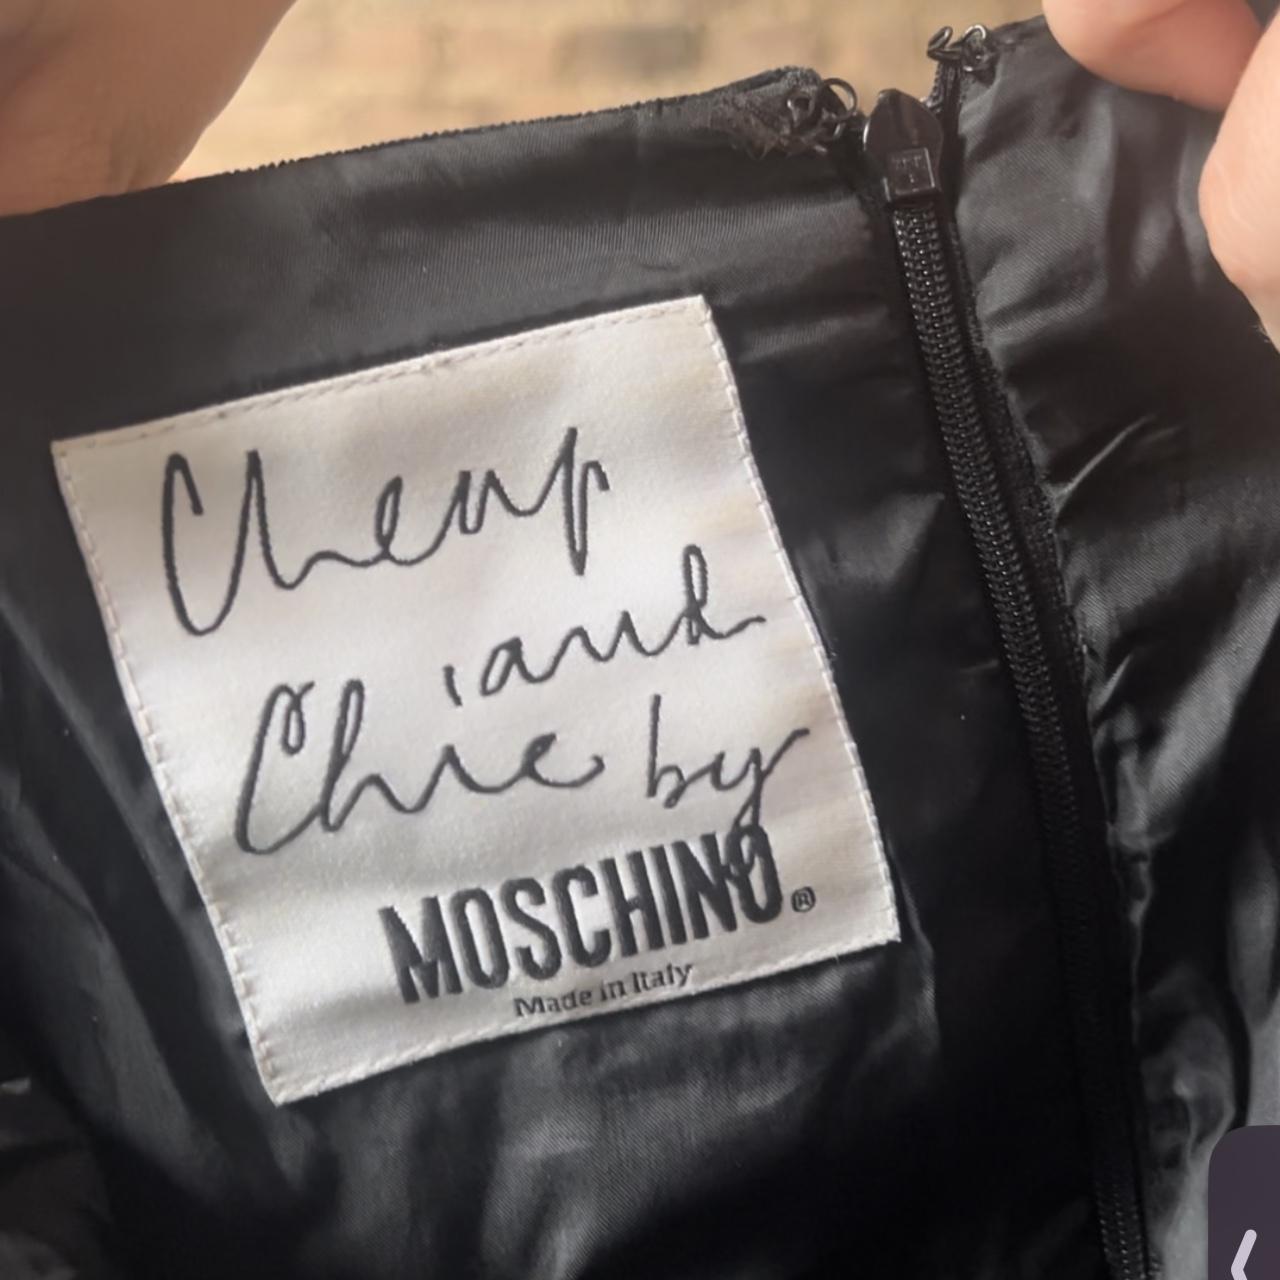 Moschino Cheap & Chic Women's Black Dress (3)